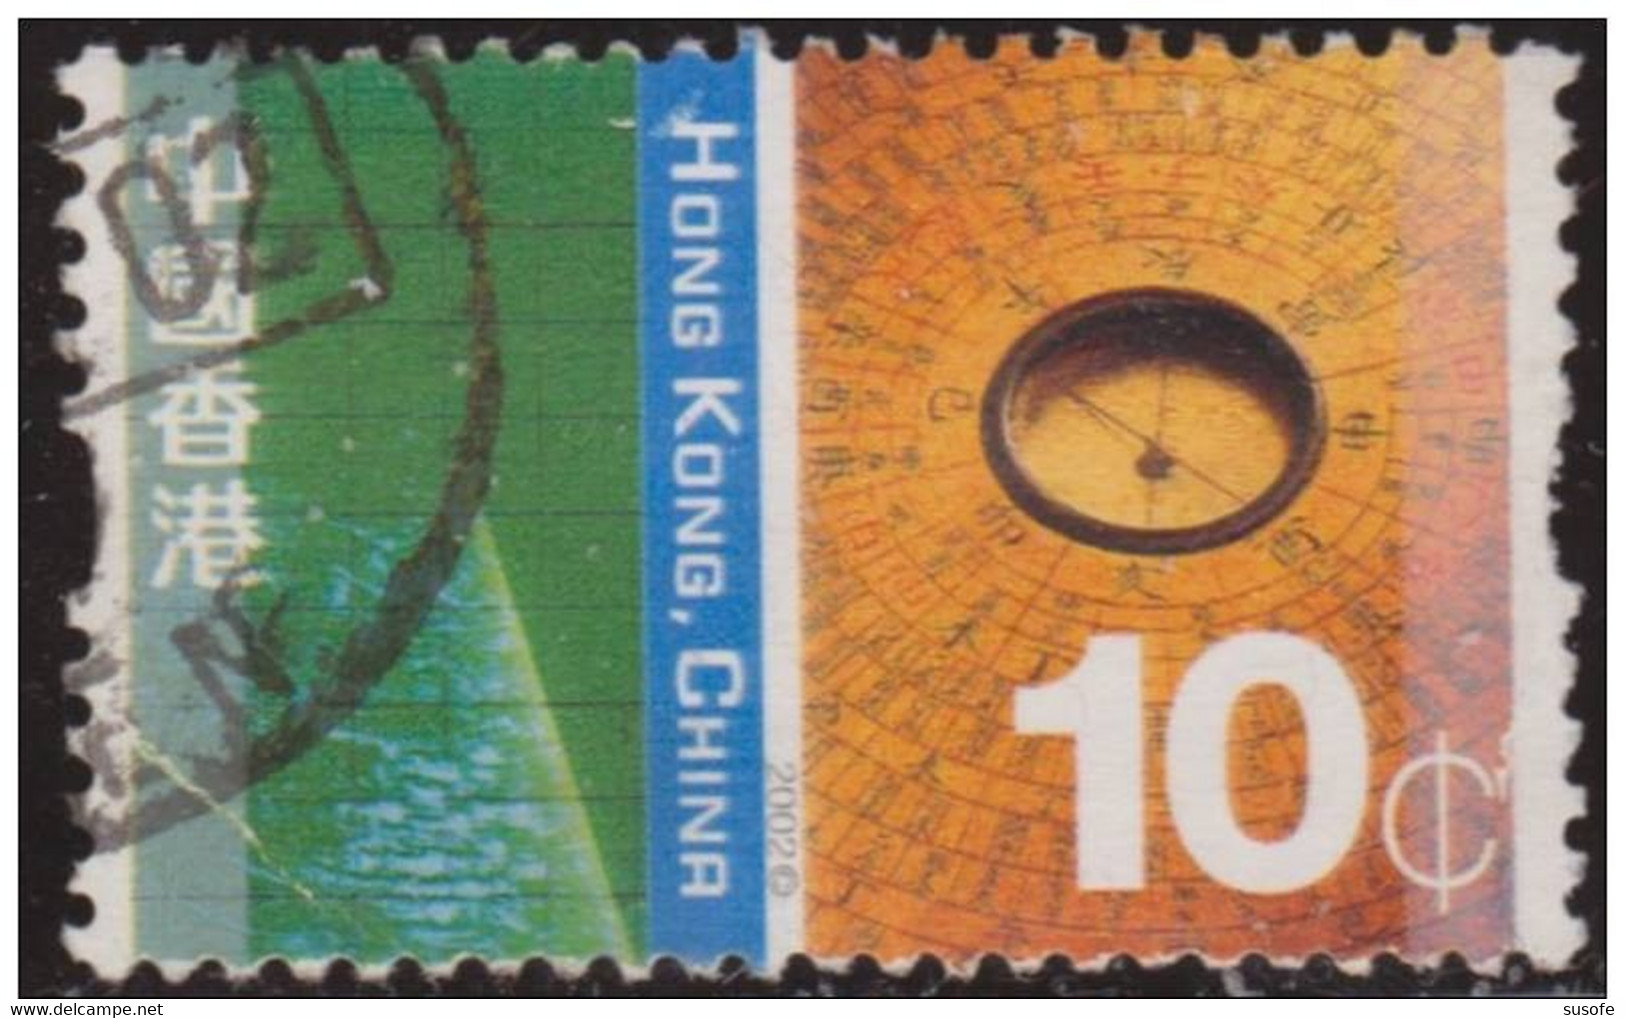 Hong Kong China 2002 Scott 998 Sello º Cultural Diversity Navegacion Michel 1055 Yvert 1027 Stamps Timbre Briefmarke - Oblitérés